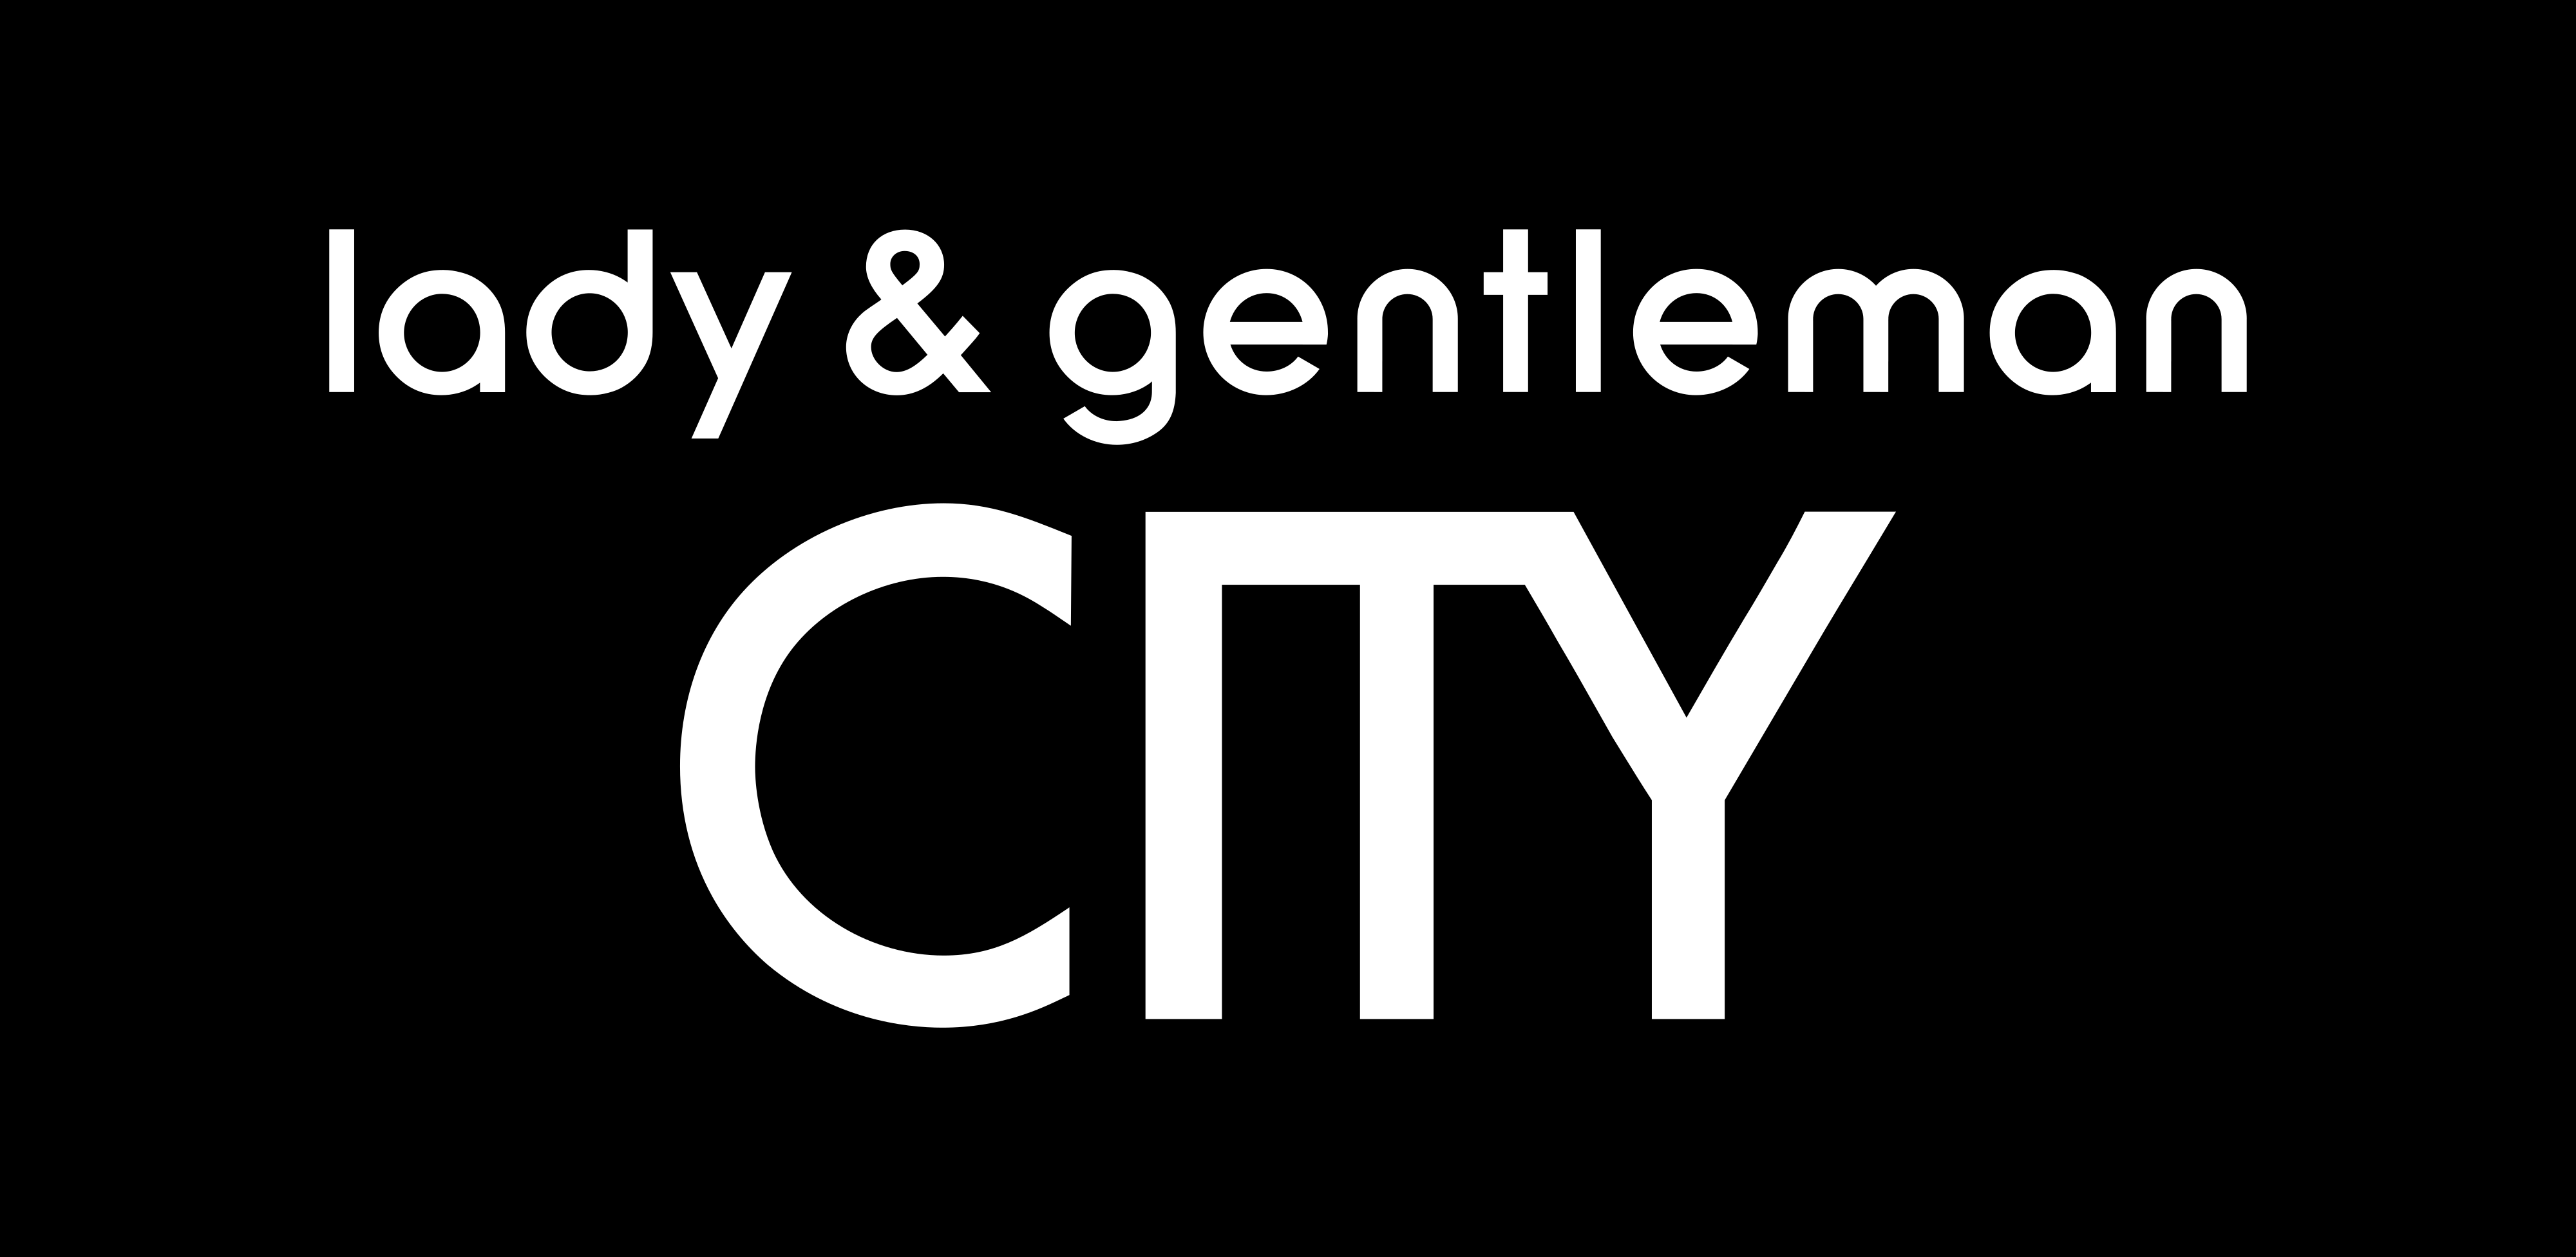 Lady Gentleman City логотип. Леди и джентльмен интернет магазин лого. Lady and Gentleman магазин одежды лого. Леди и джентльмен Сити лого одежда. Lady s and gentleman s